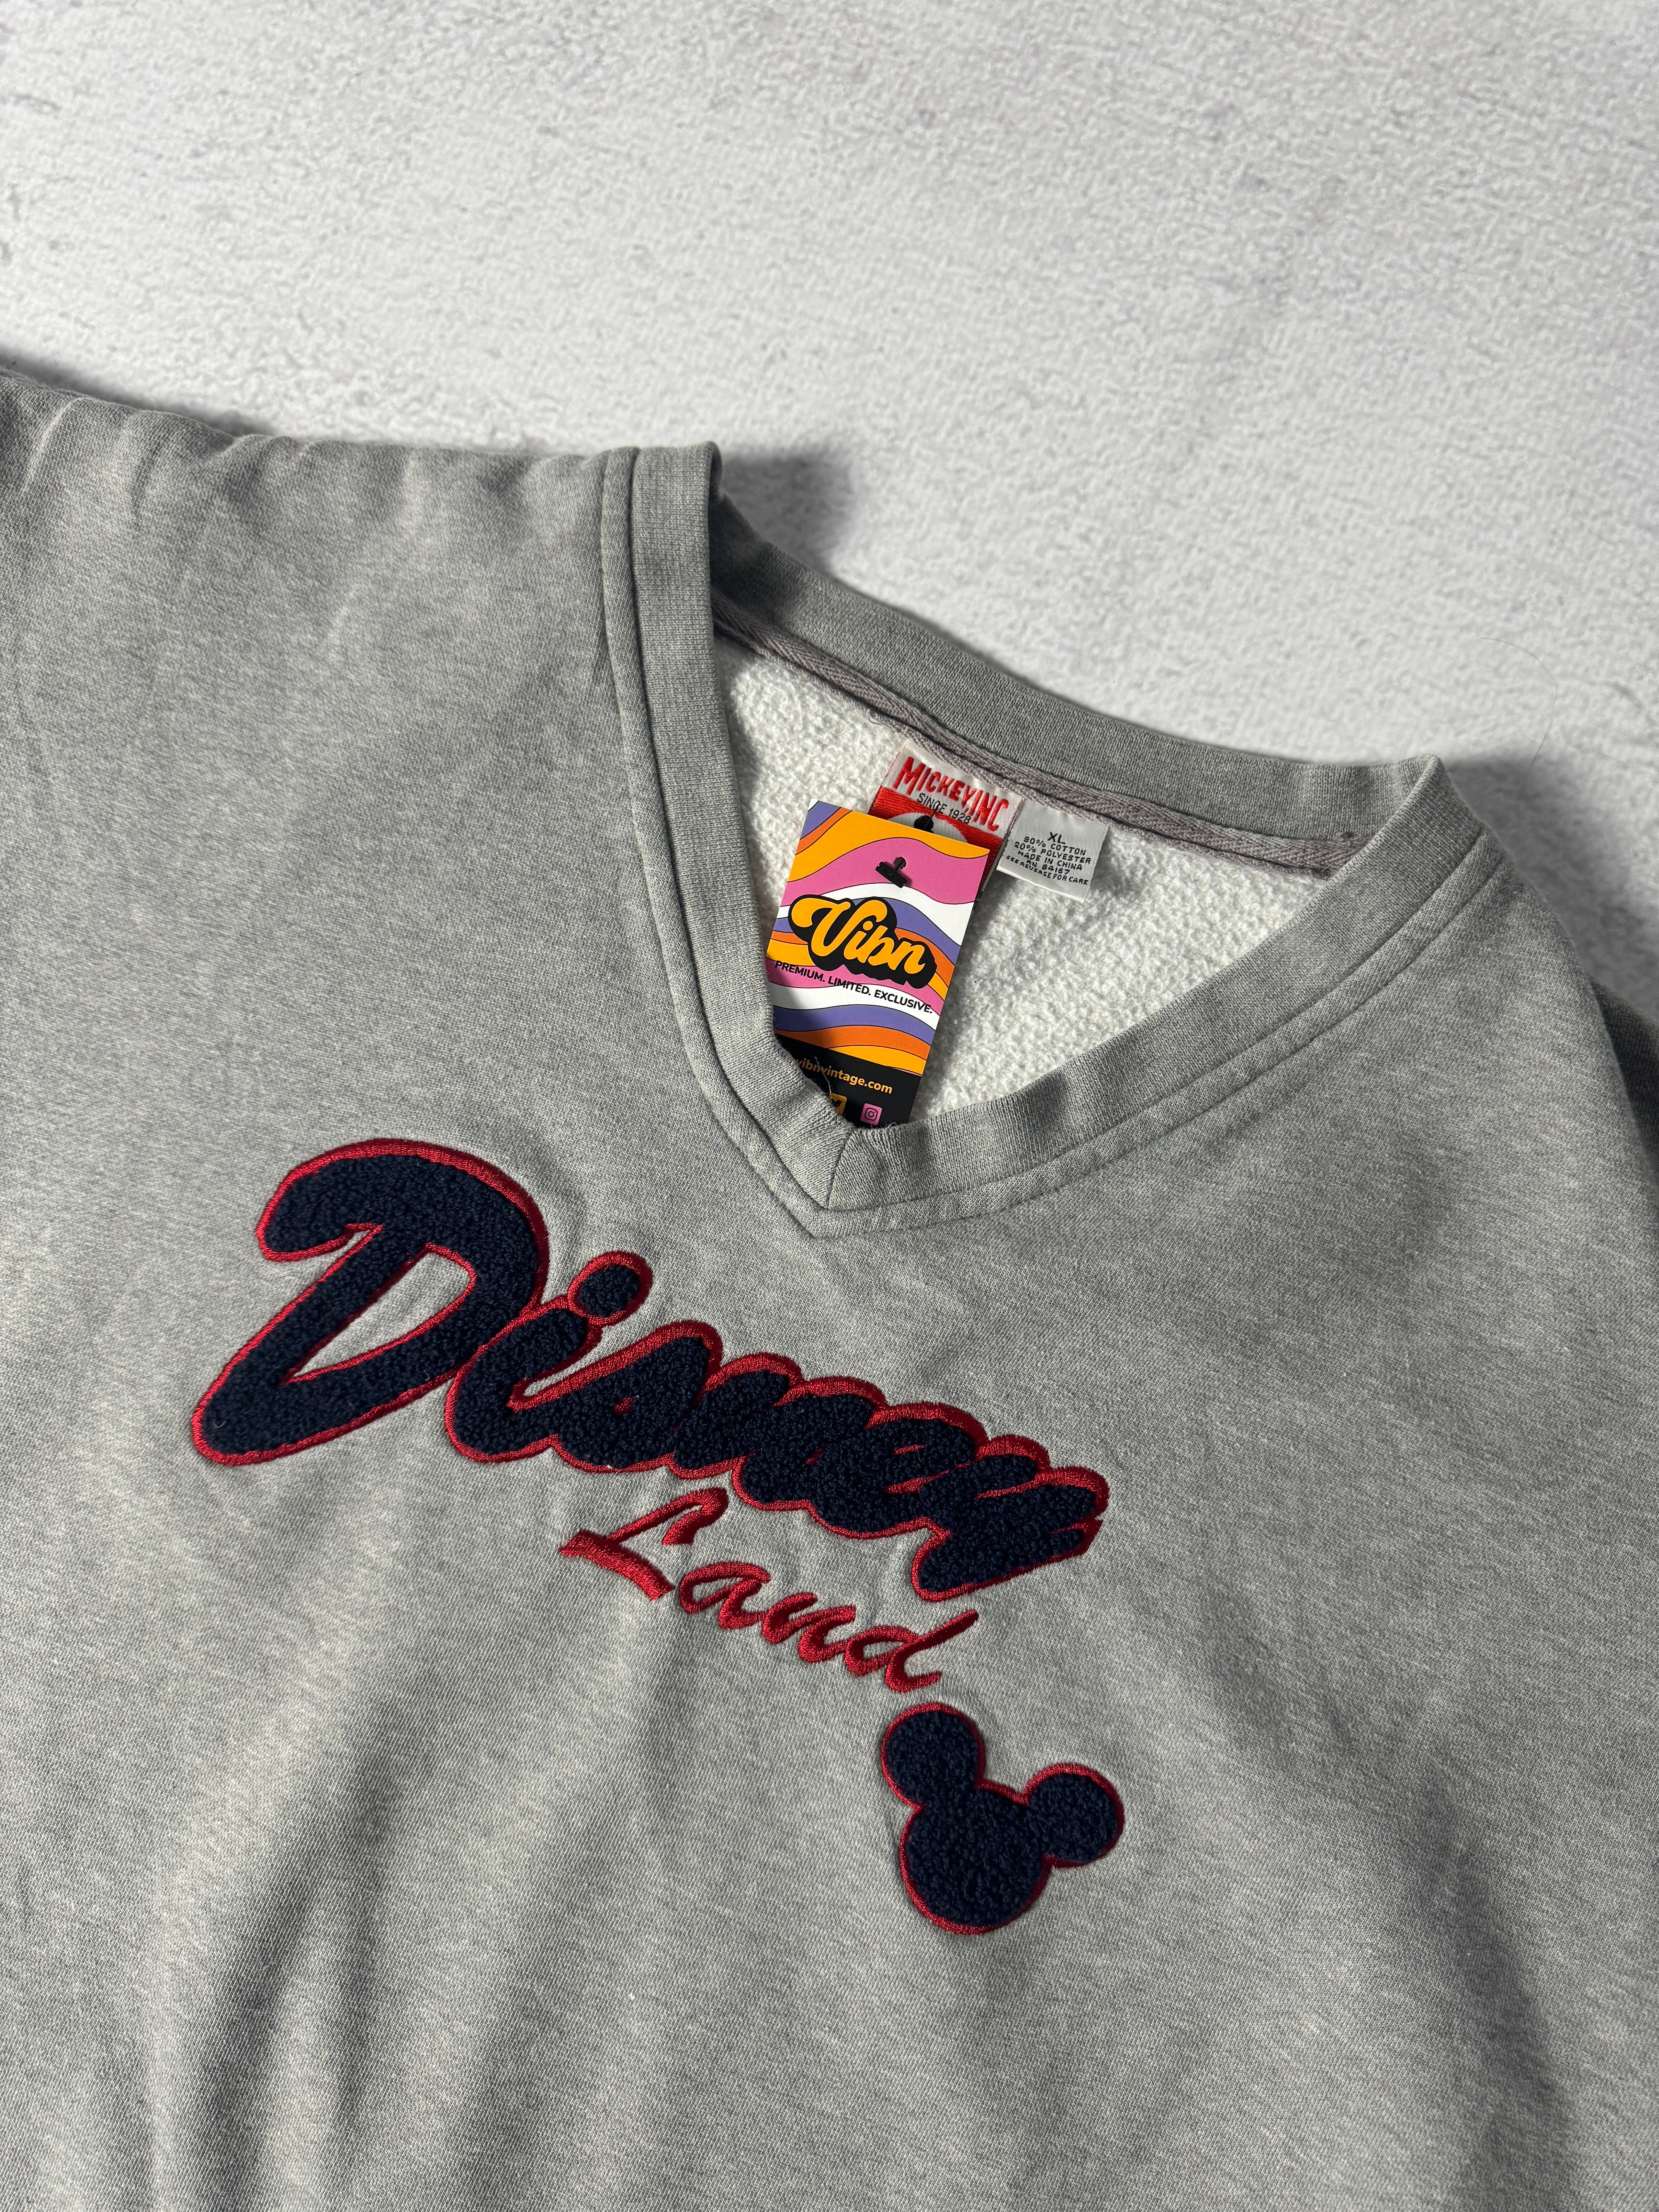 Vintage Disney Land V-Neck Sweatshirt - Women's XL